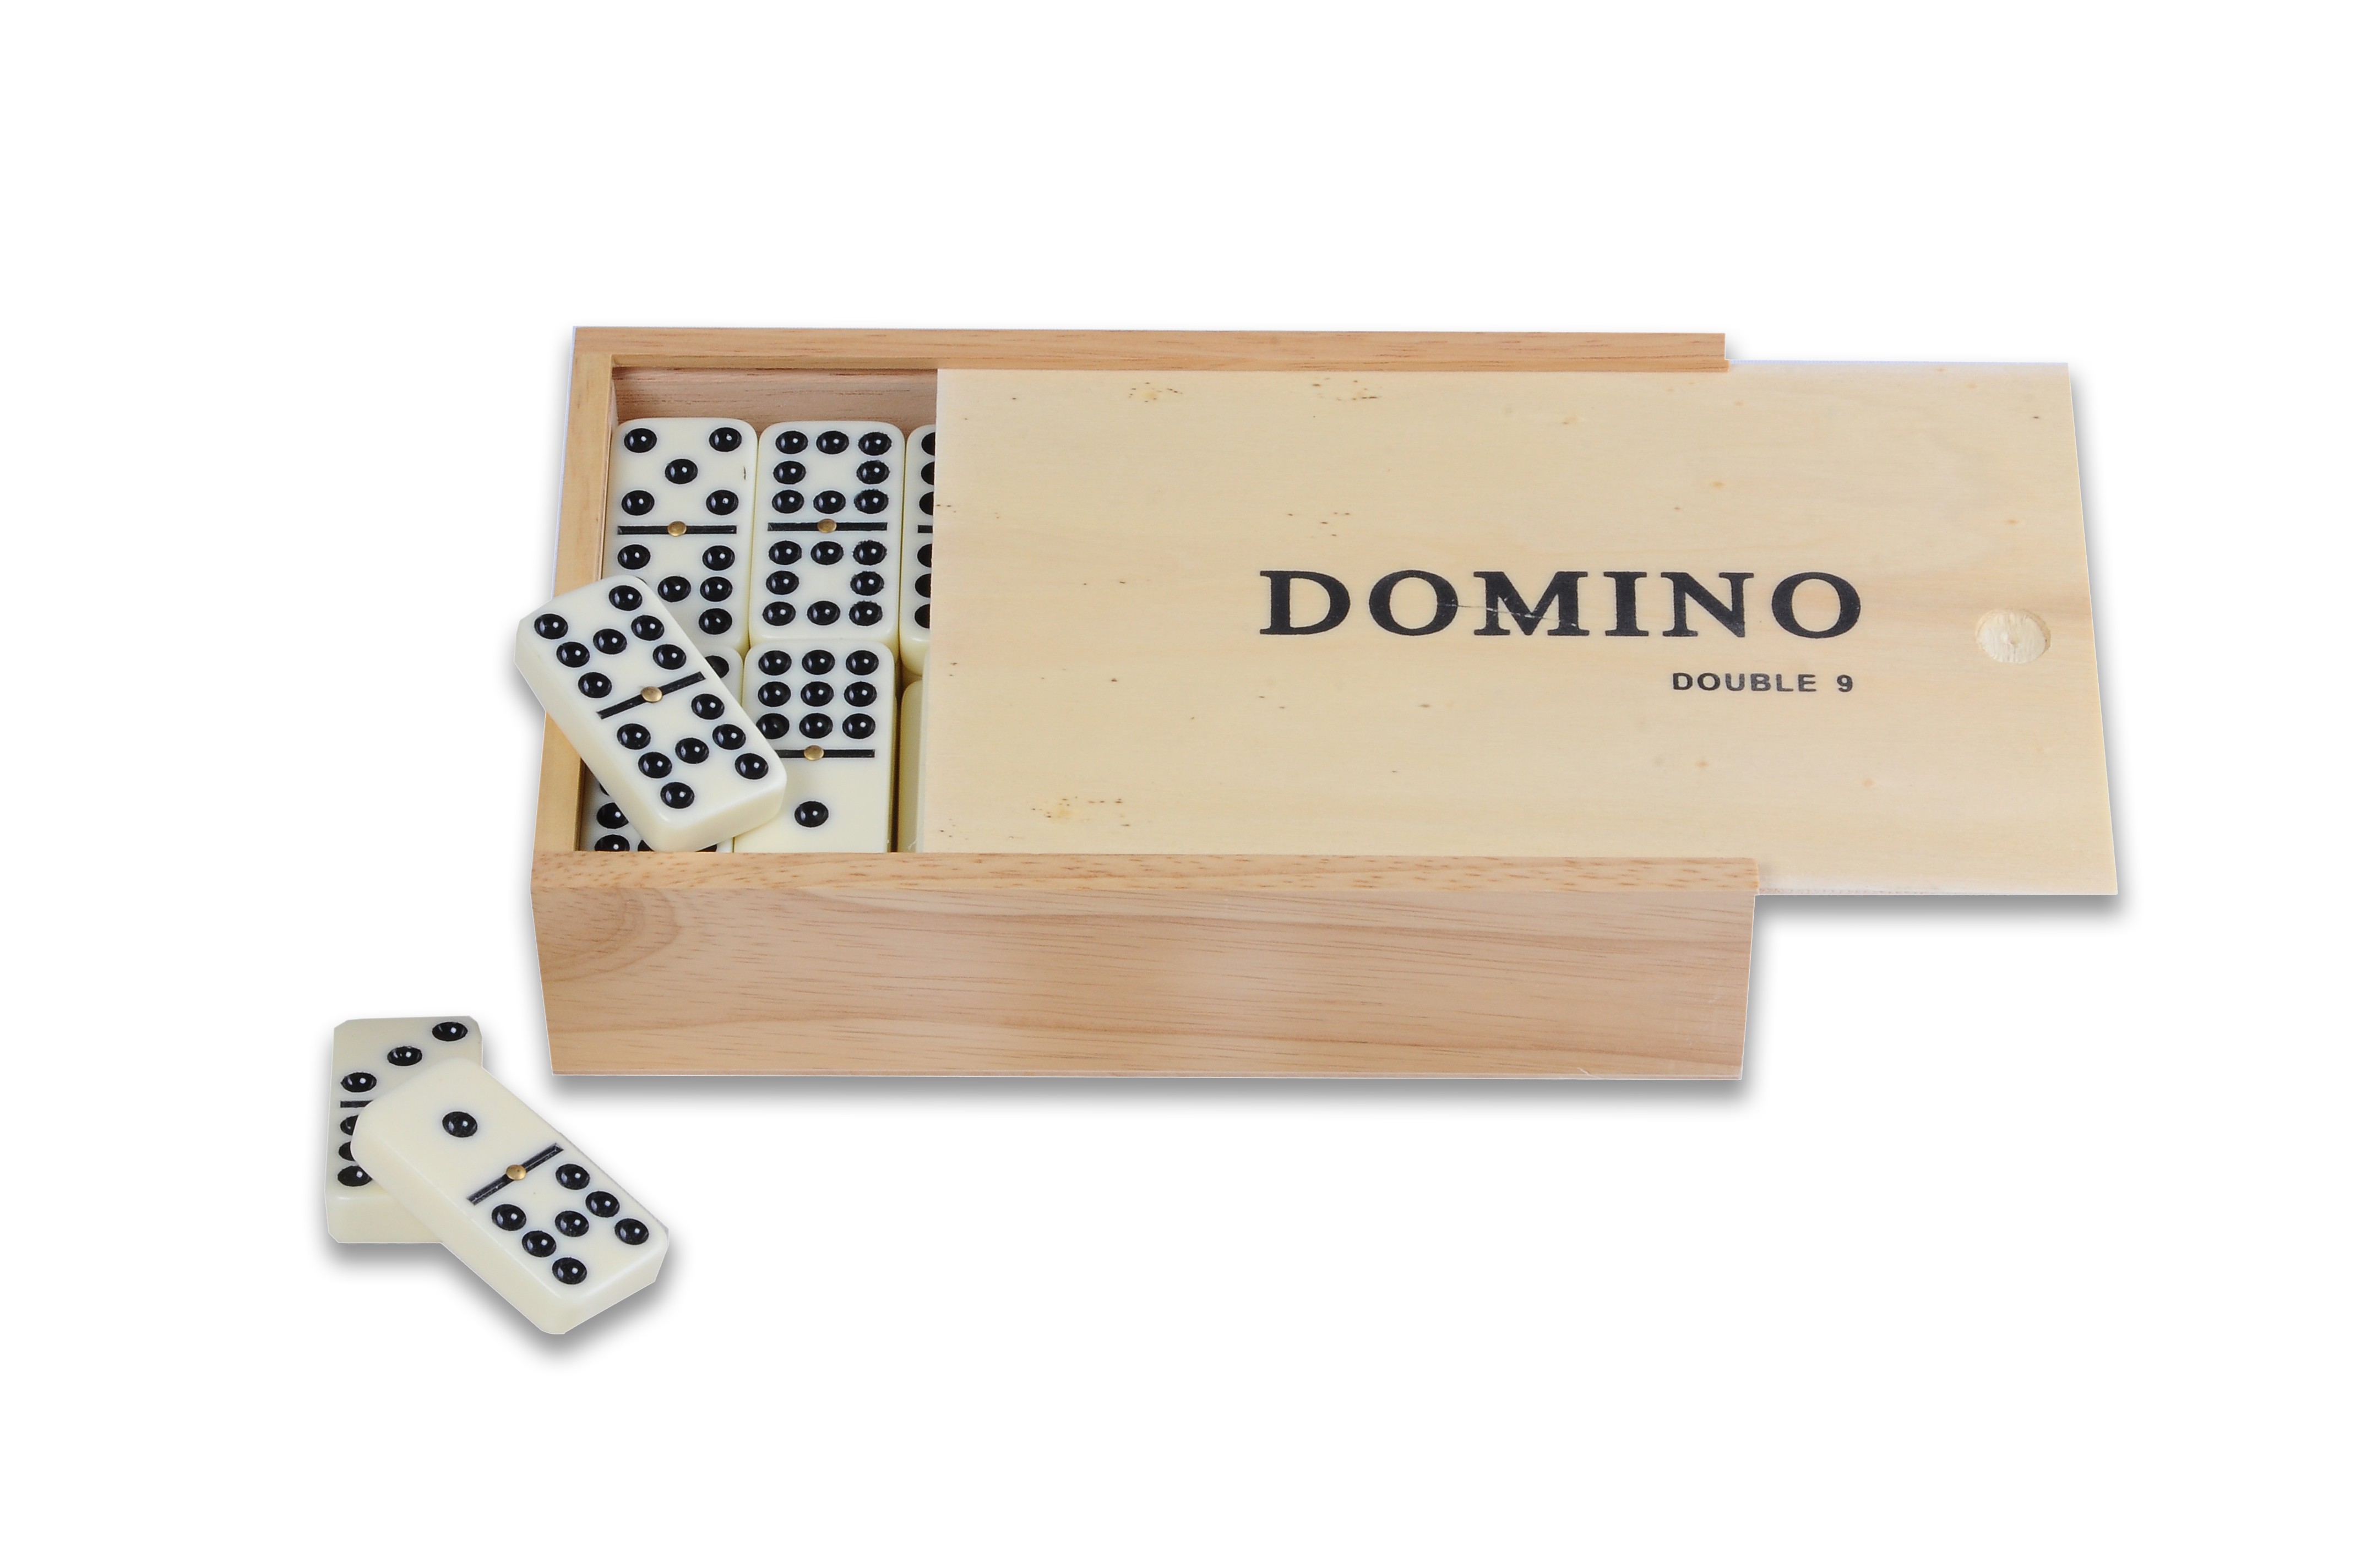 Double 9 dominos AVEC SPINNERS dans boîte en bois 